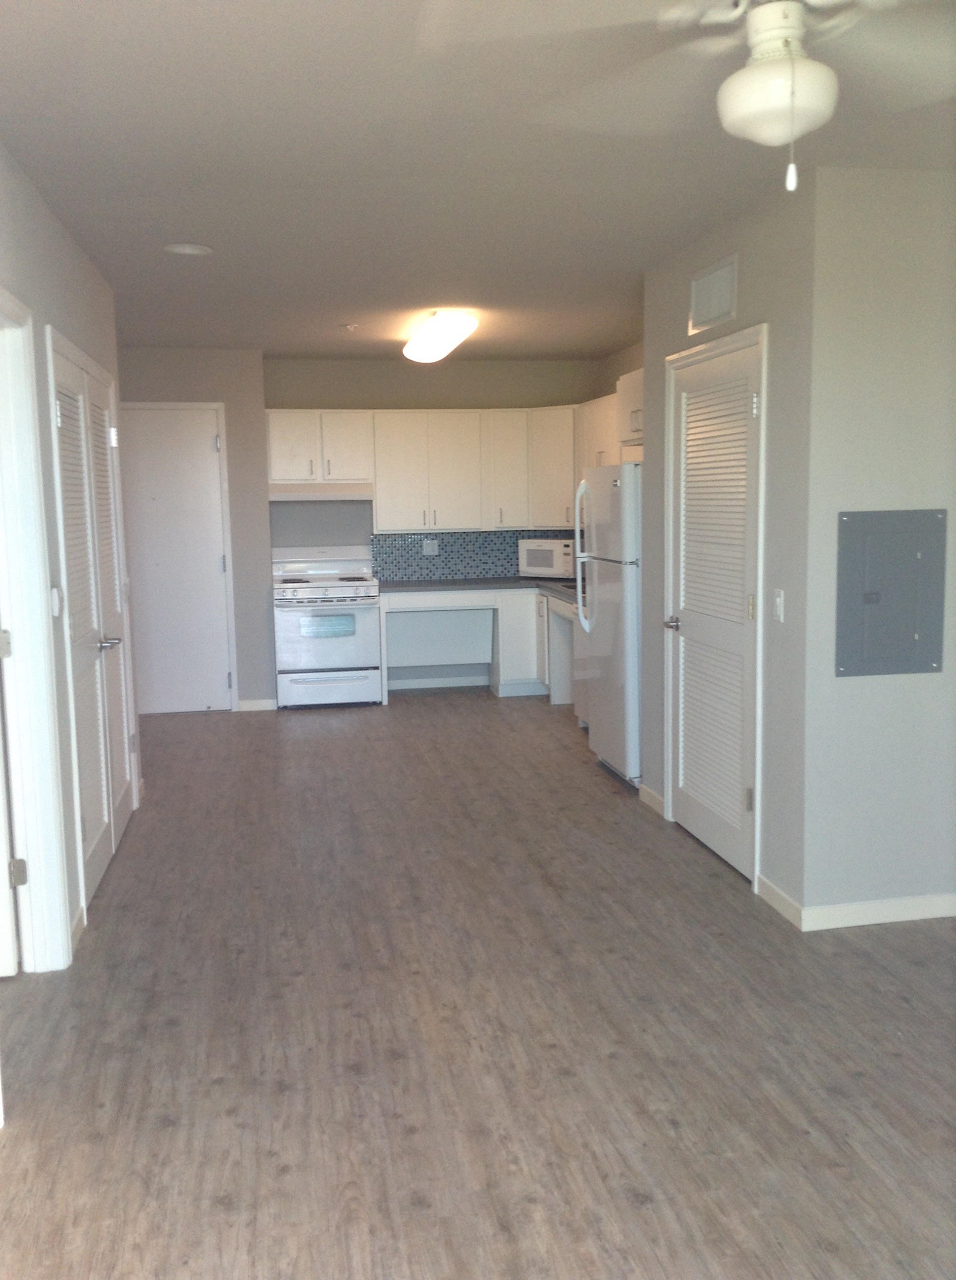 Photo of PARADISE POINT SENIOR HOUSING. Affordable housing located at 4 NORTH BLACKWATER LANE KEY LARGO, FL 33037